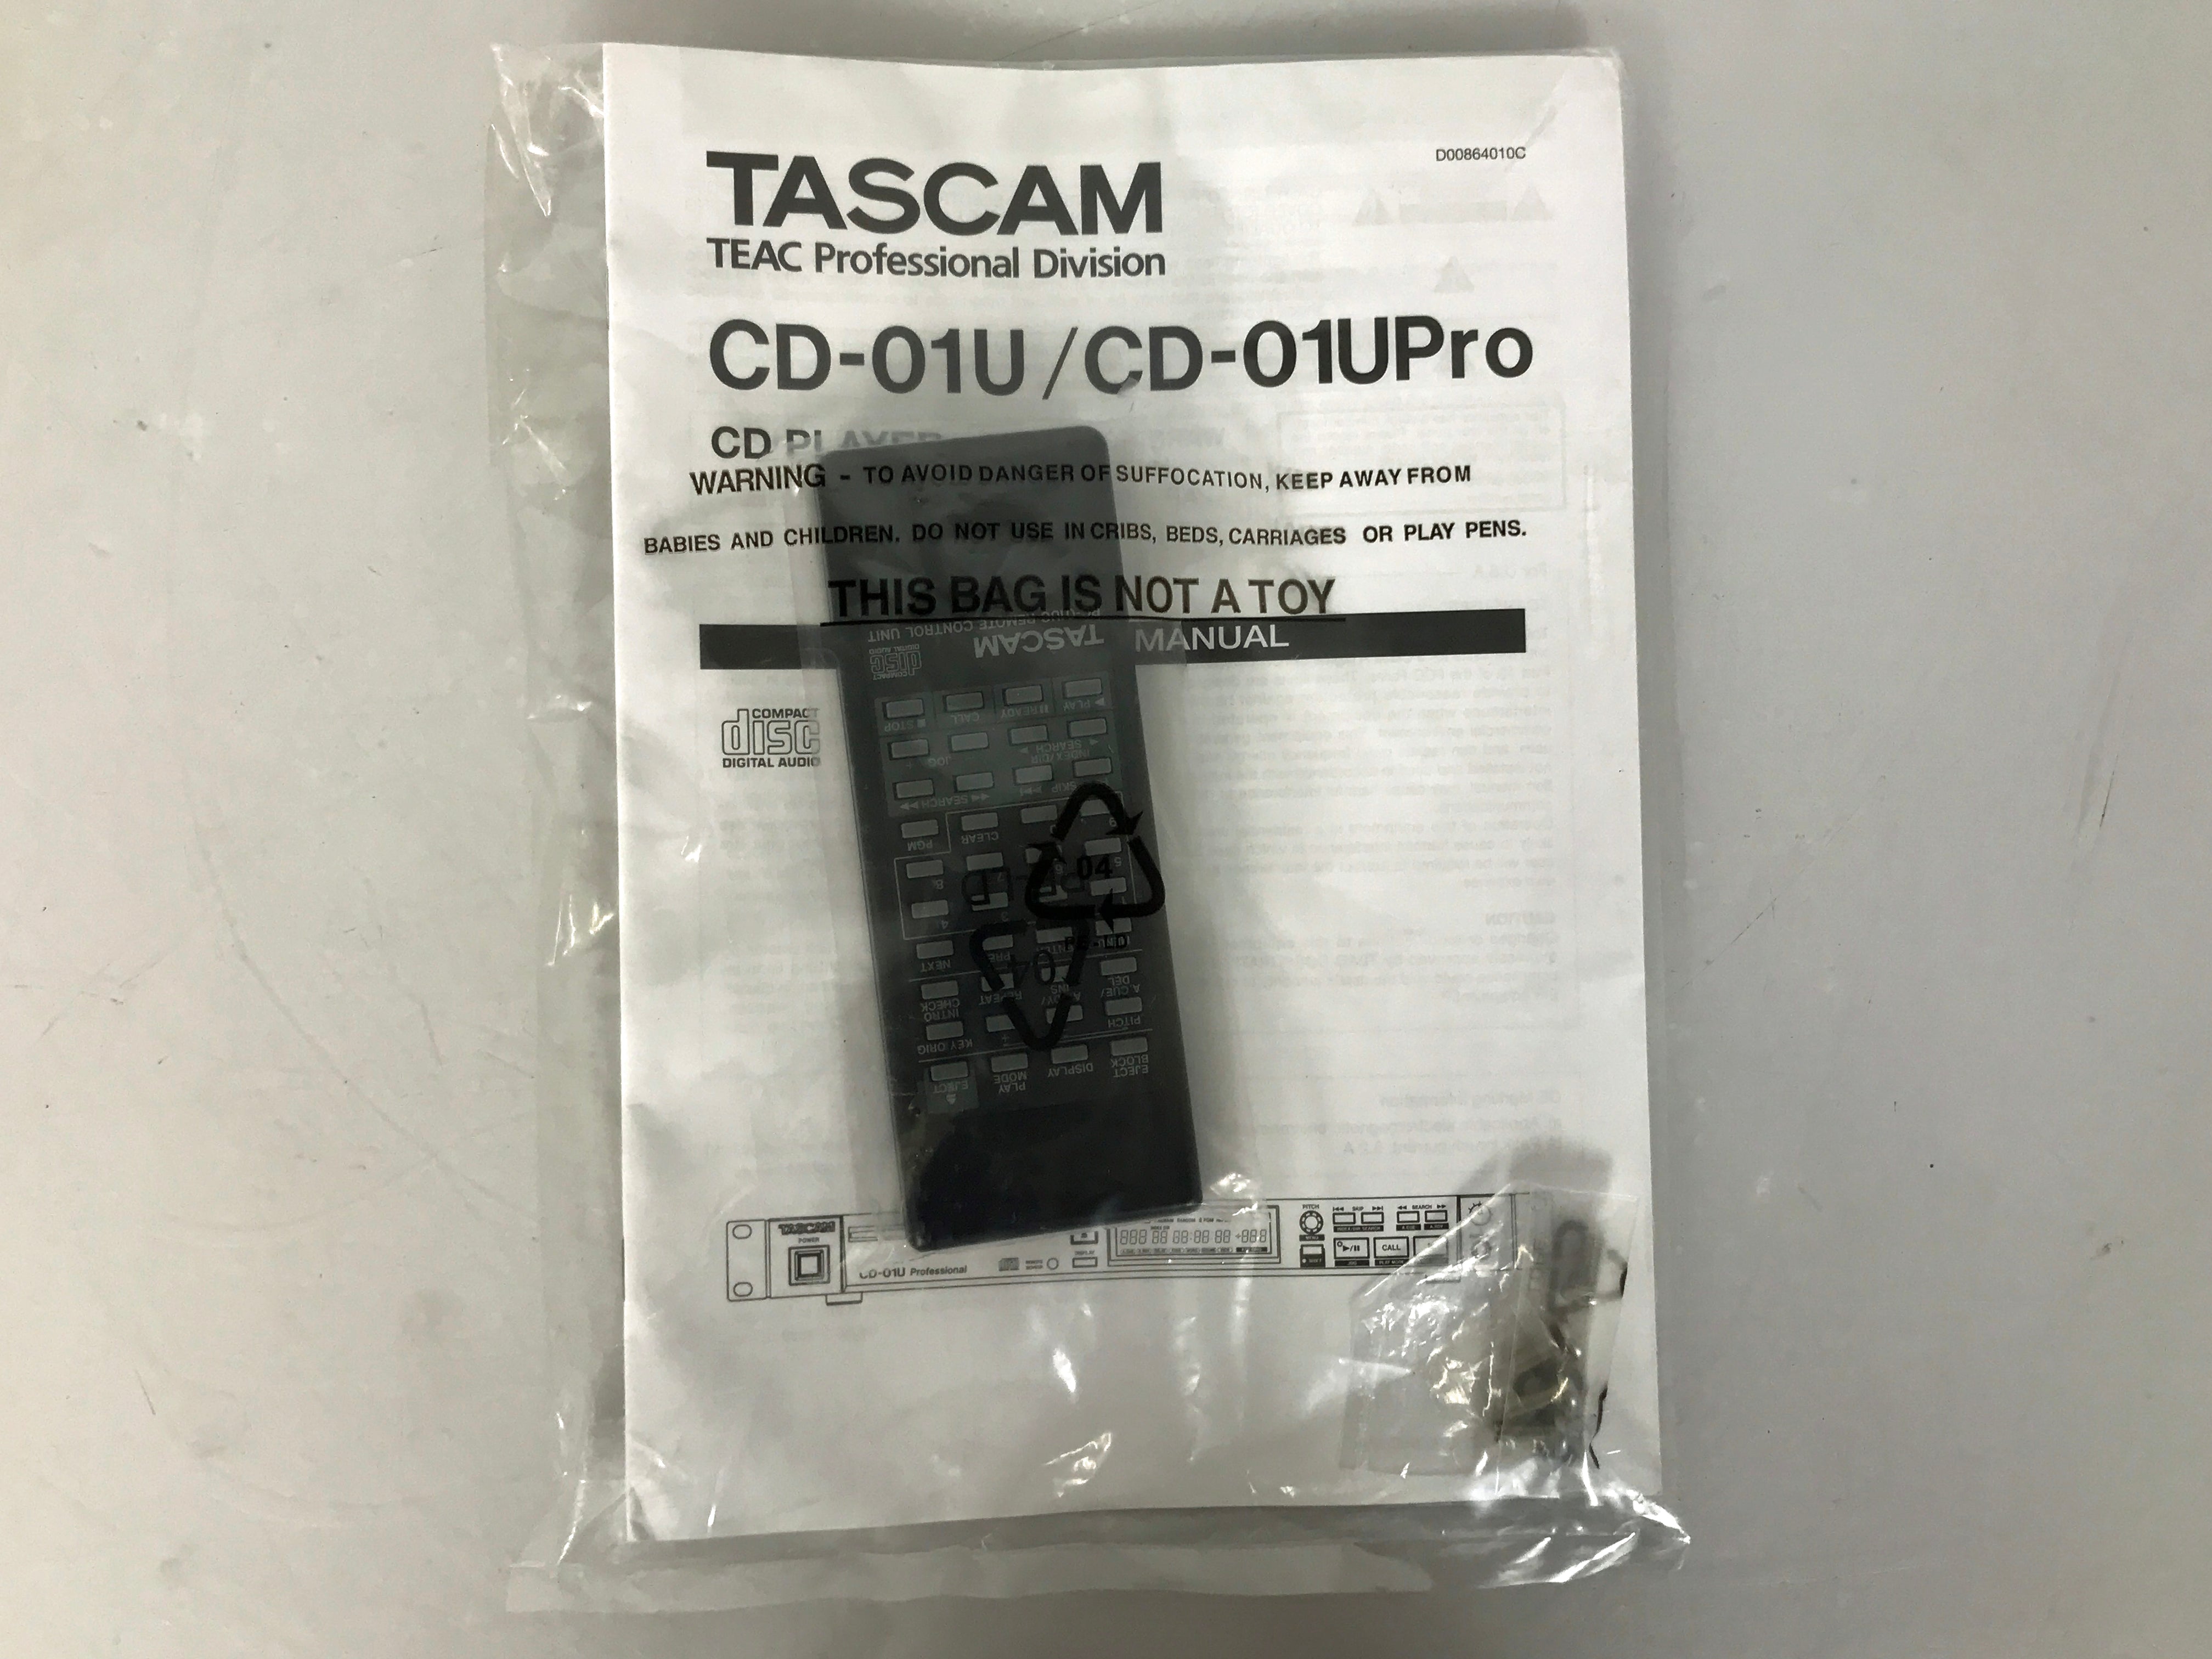 Tascam CD-01U/CD-01UPro Remote Control Unit